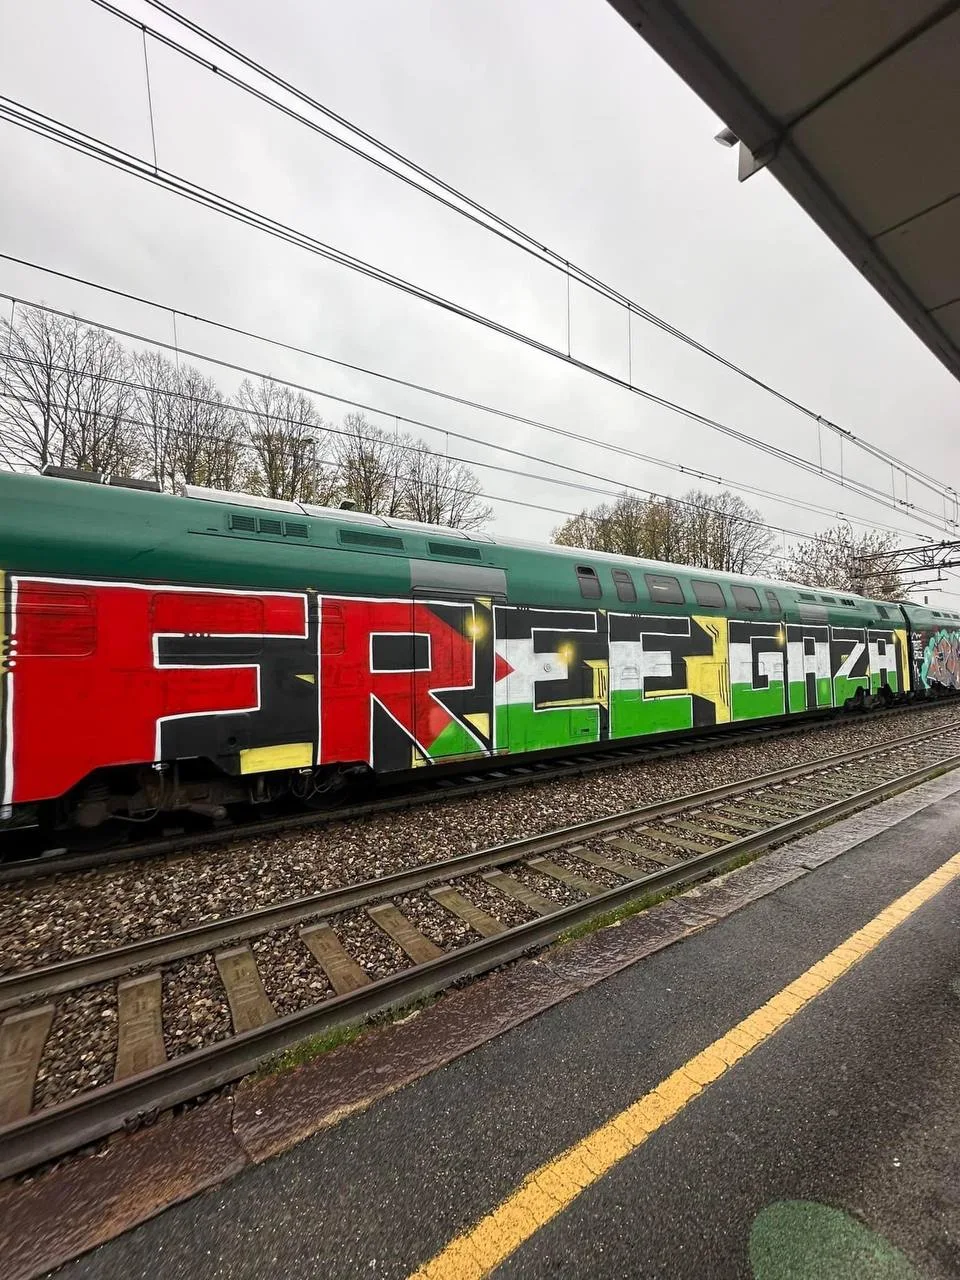 Graffiti Artwork on a Train Carriage 'Free Gaza' (Milano, Italy)